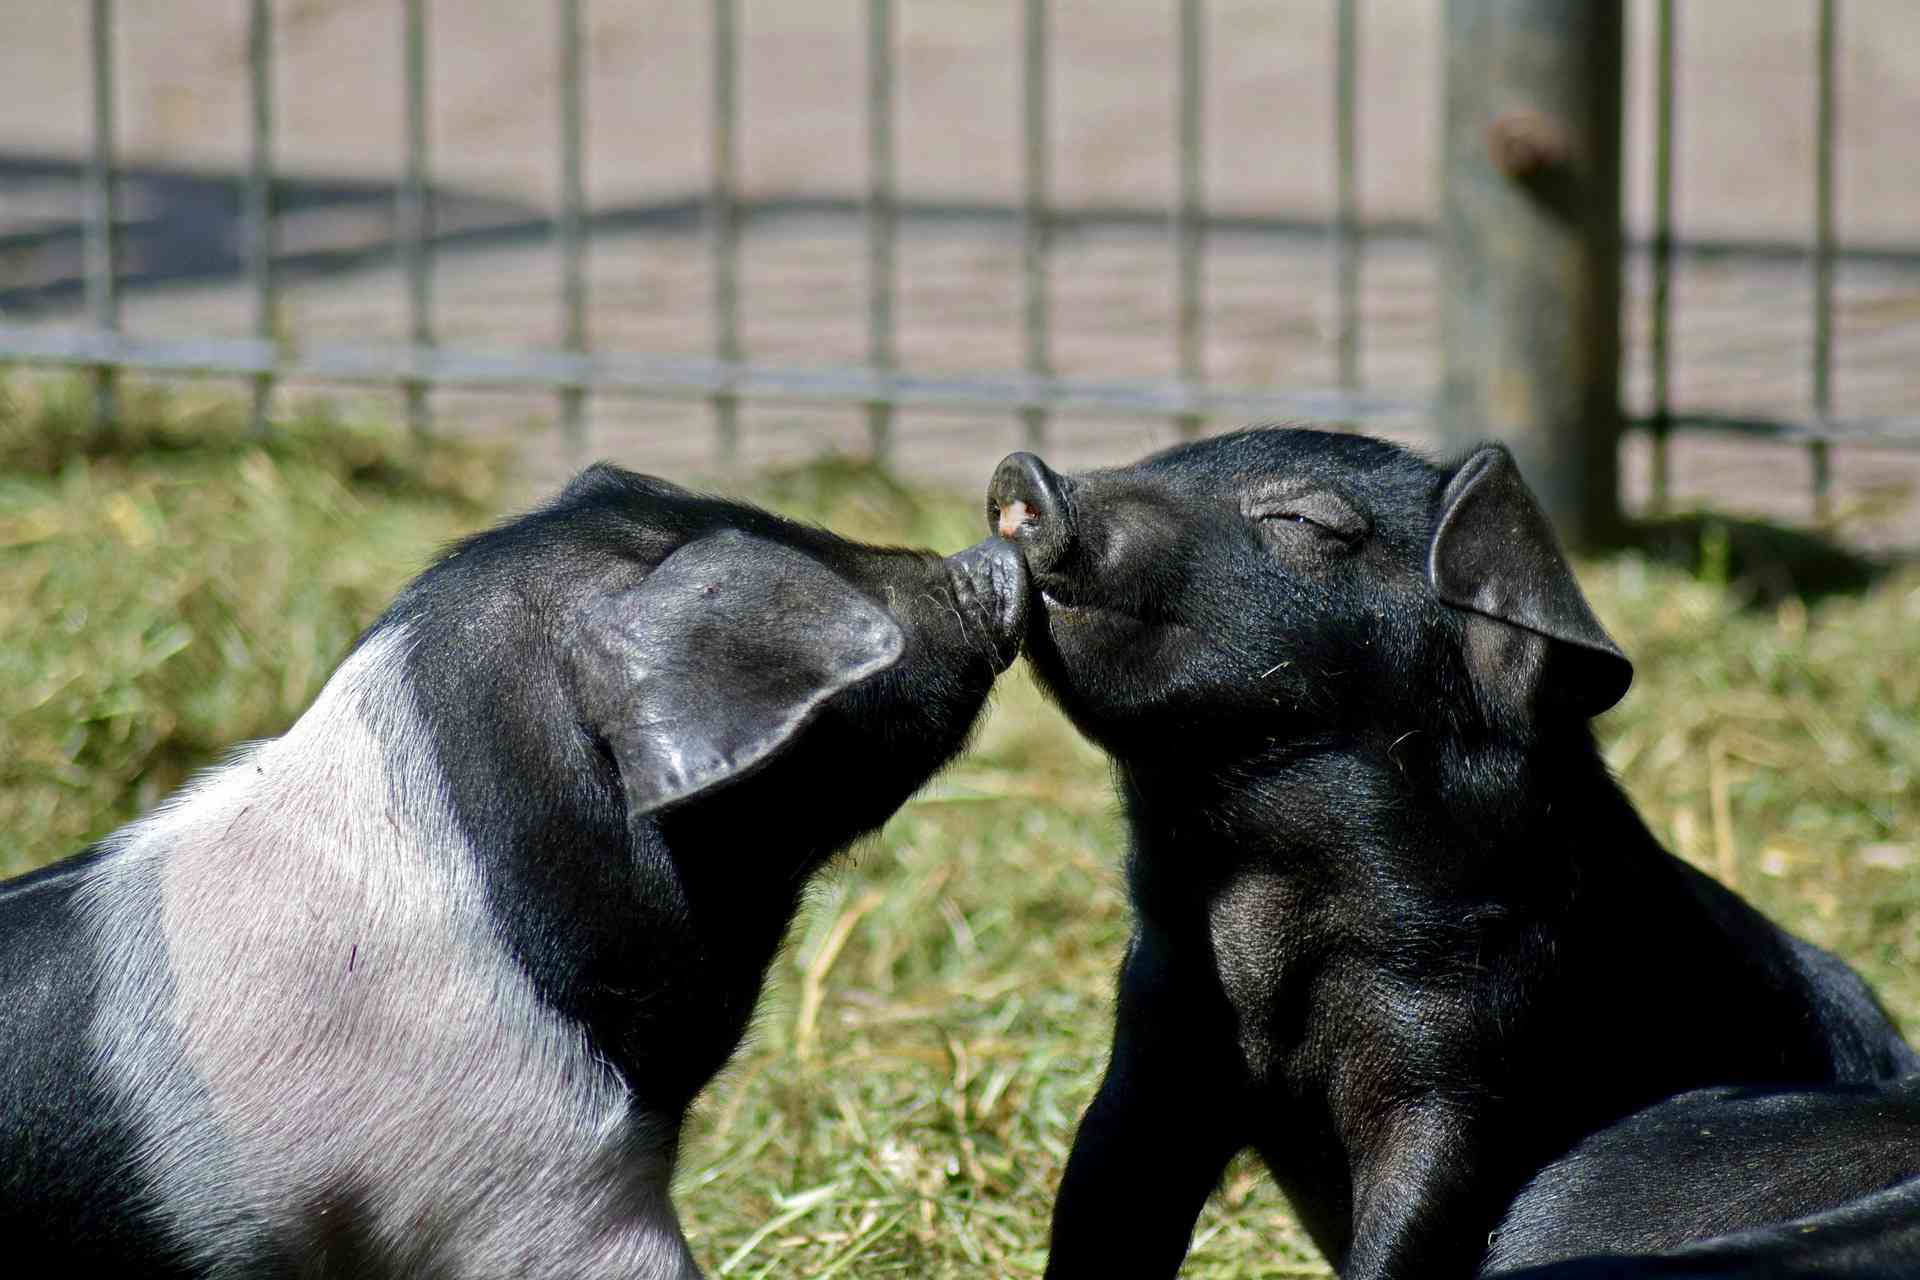 Piglets kissing.